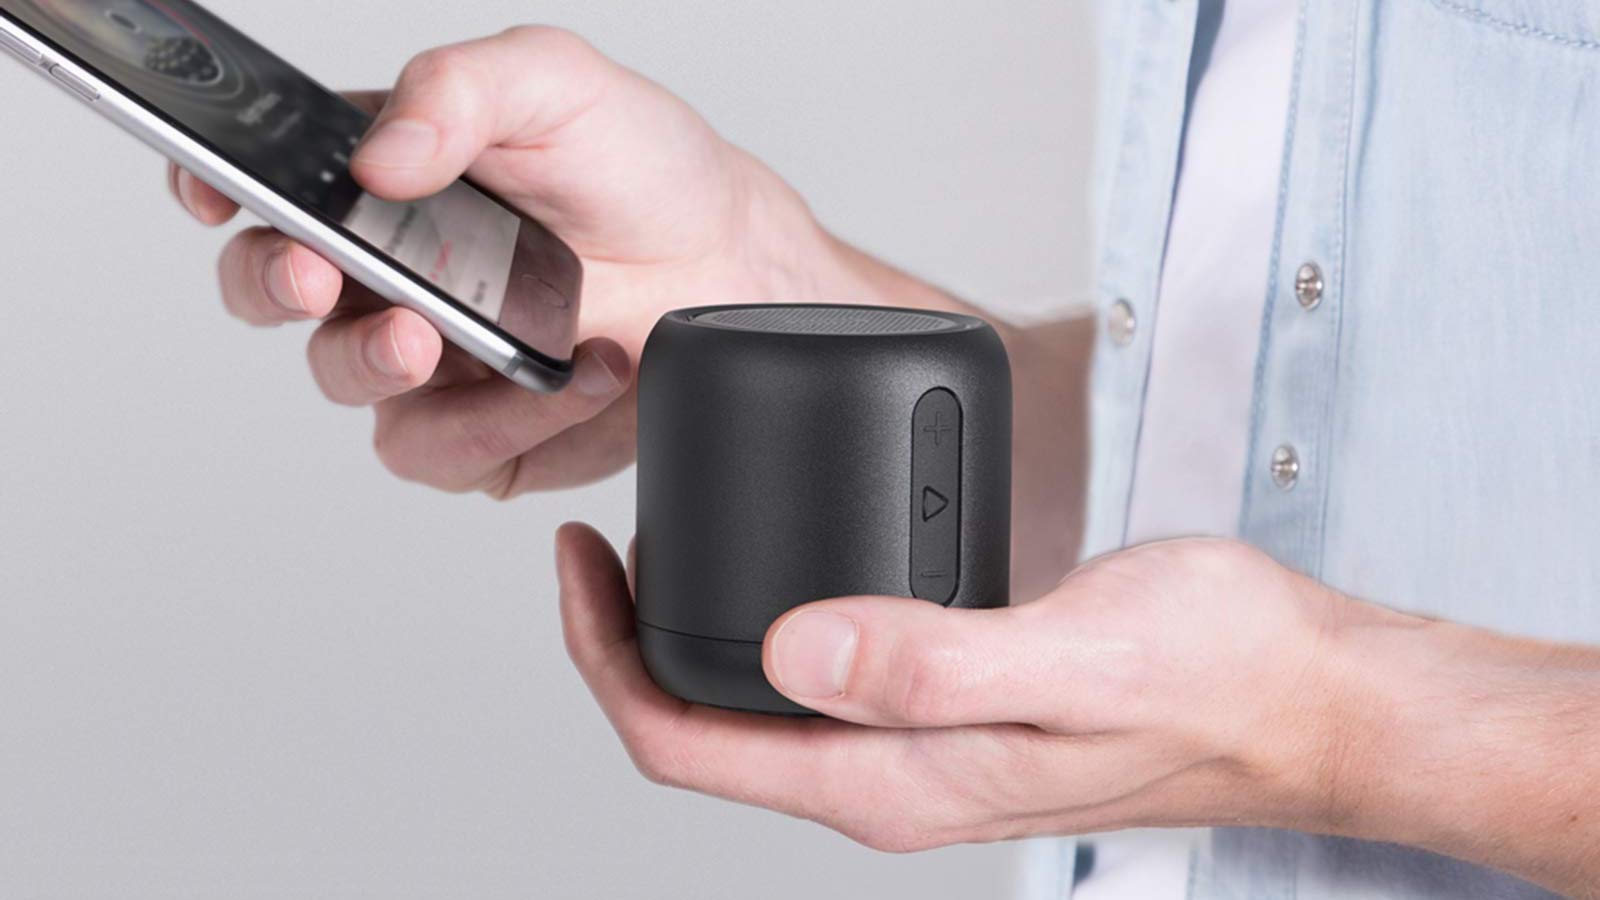 The Anker SoundCore Mini Portable Bluetooth Speaker